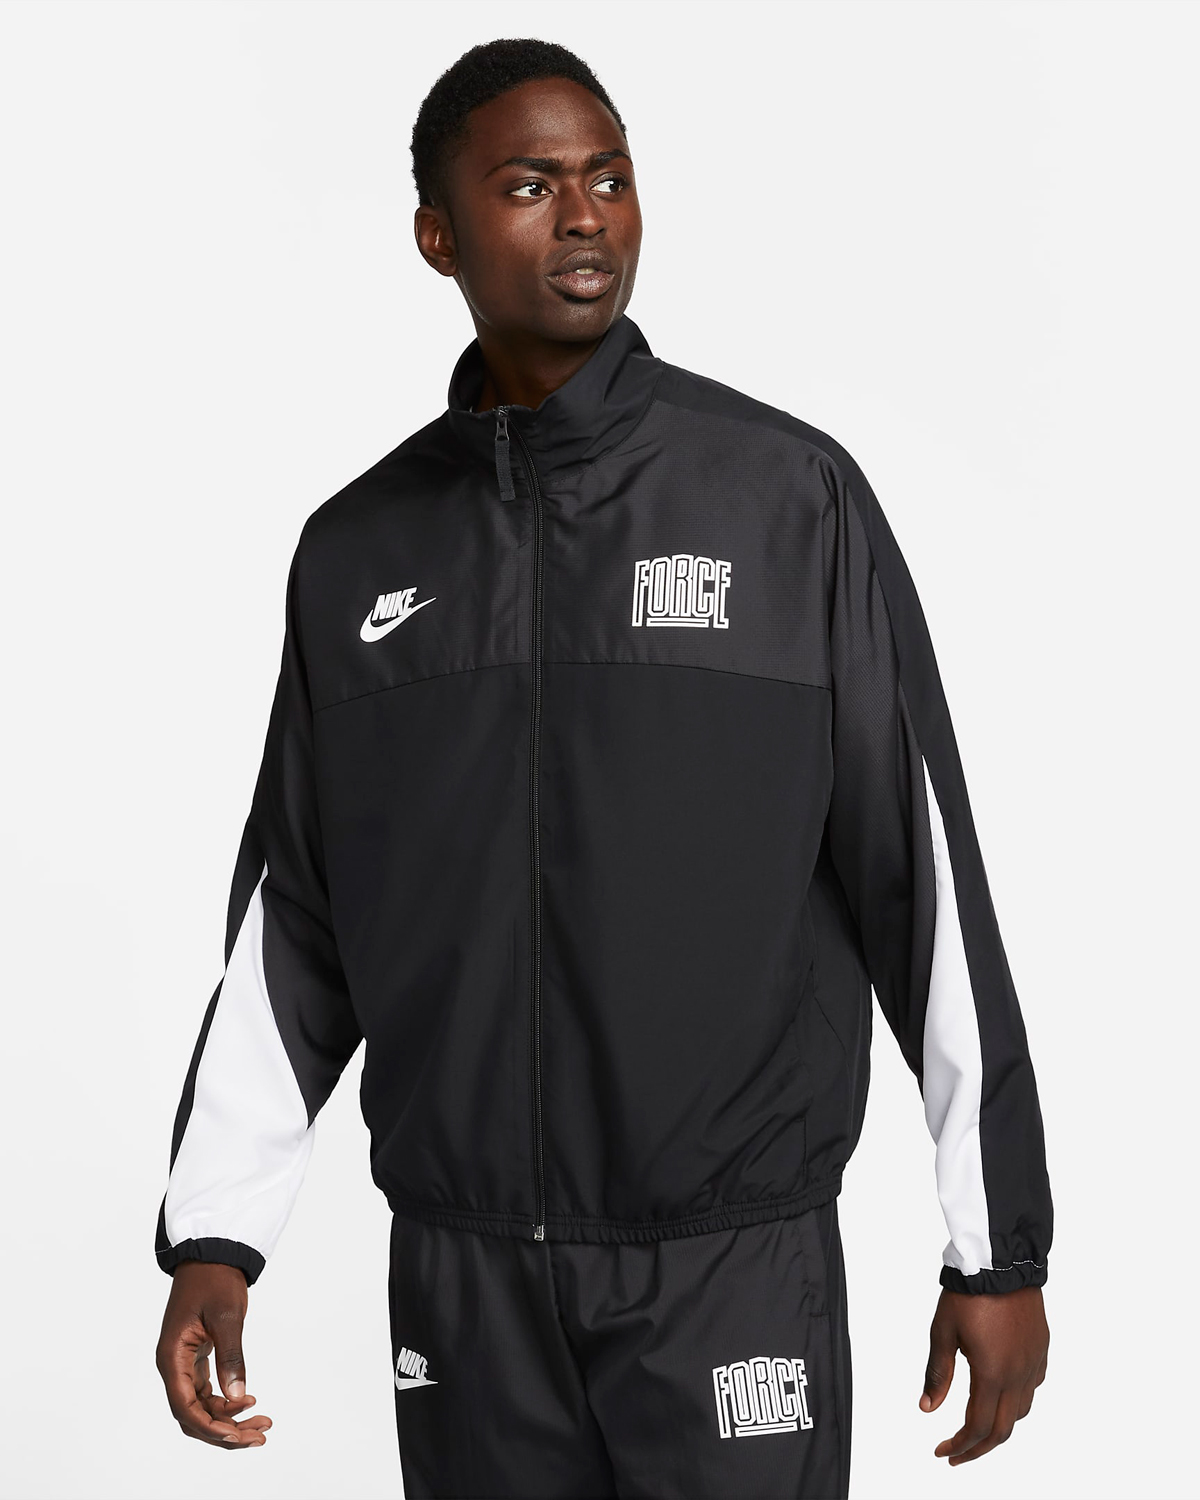 Nike-Starting-5-Basketball-Jacket-Black-White